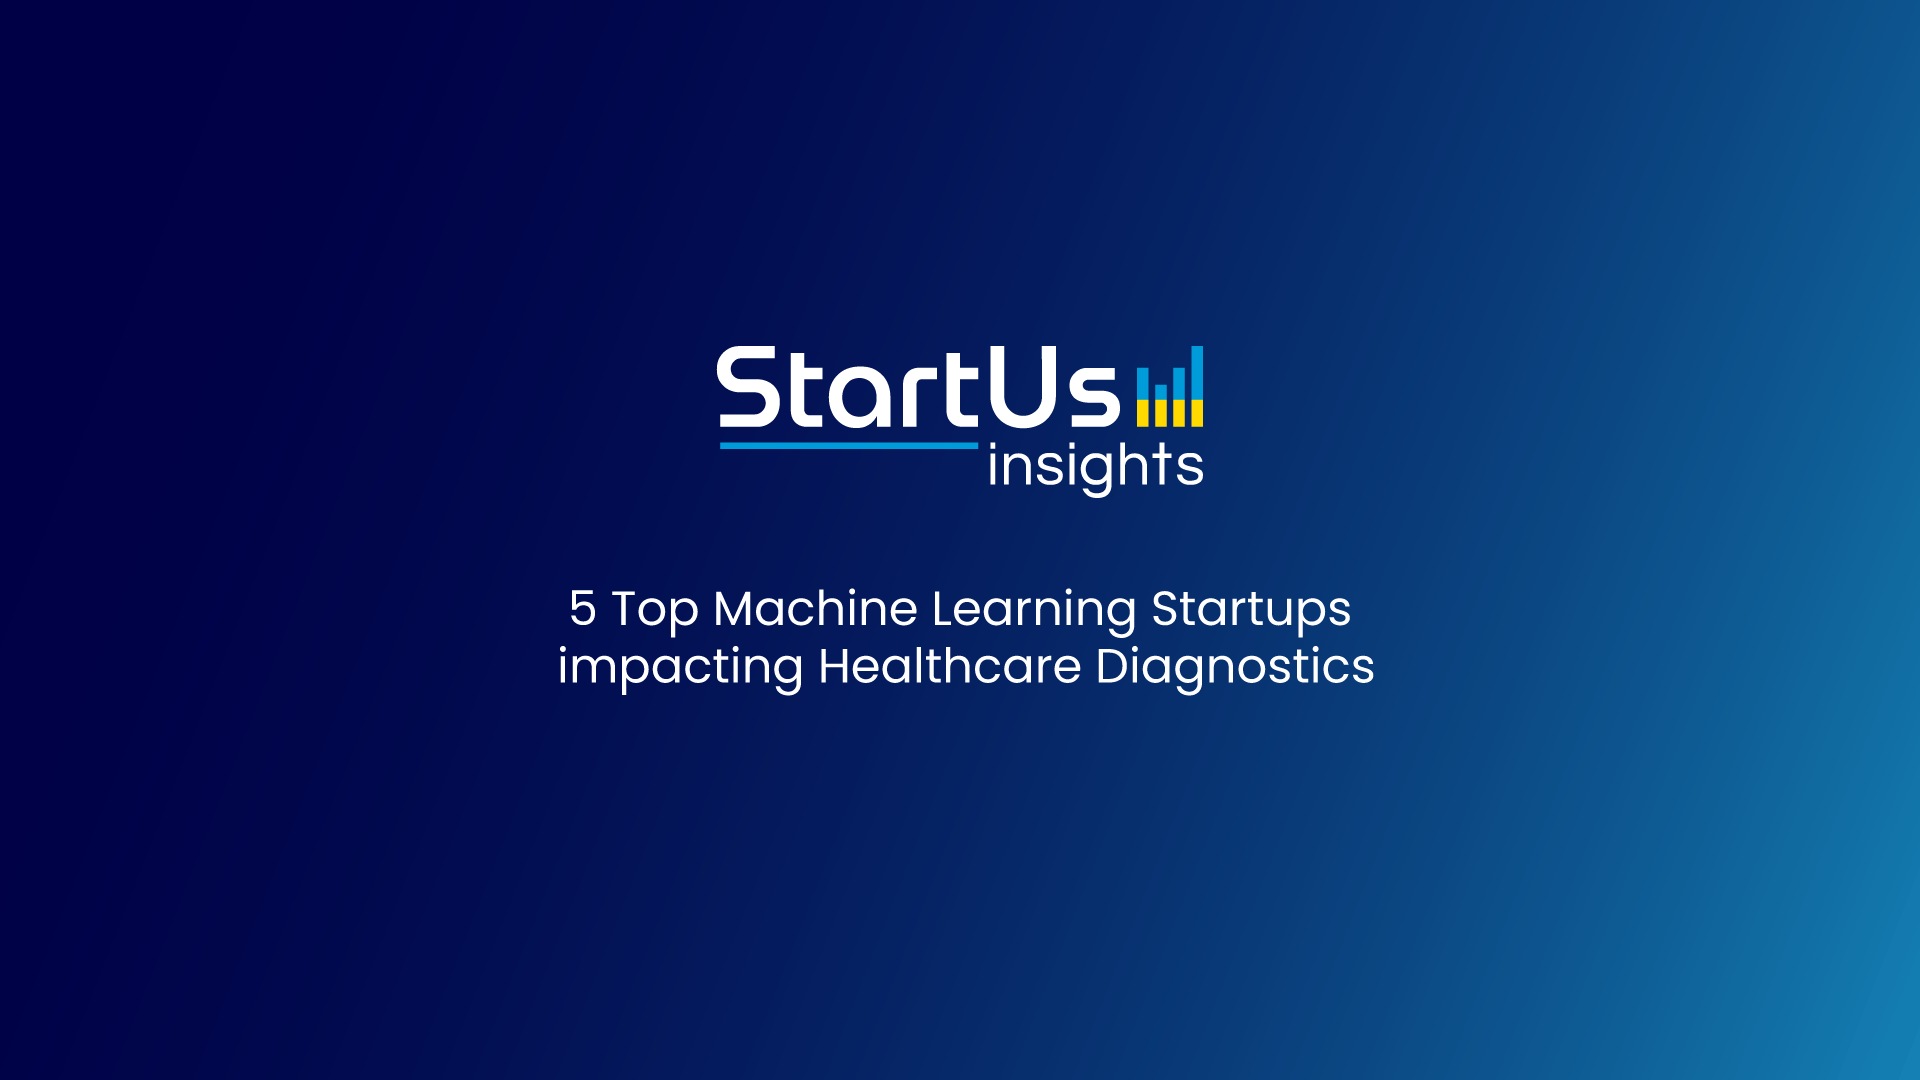 5 Top Machine Learning Startups impacting Healthcare Diagnostics